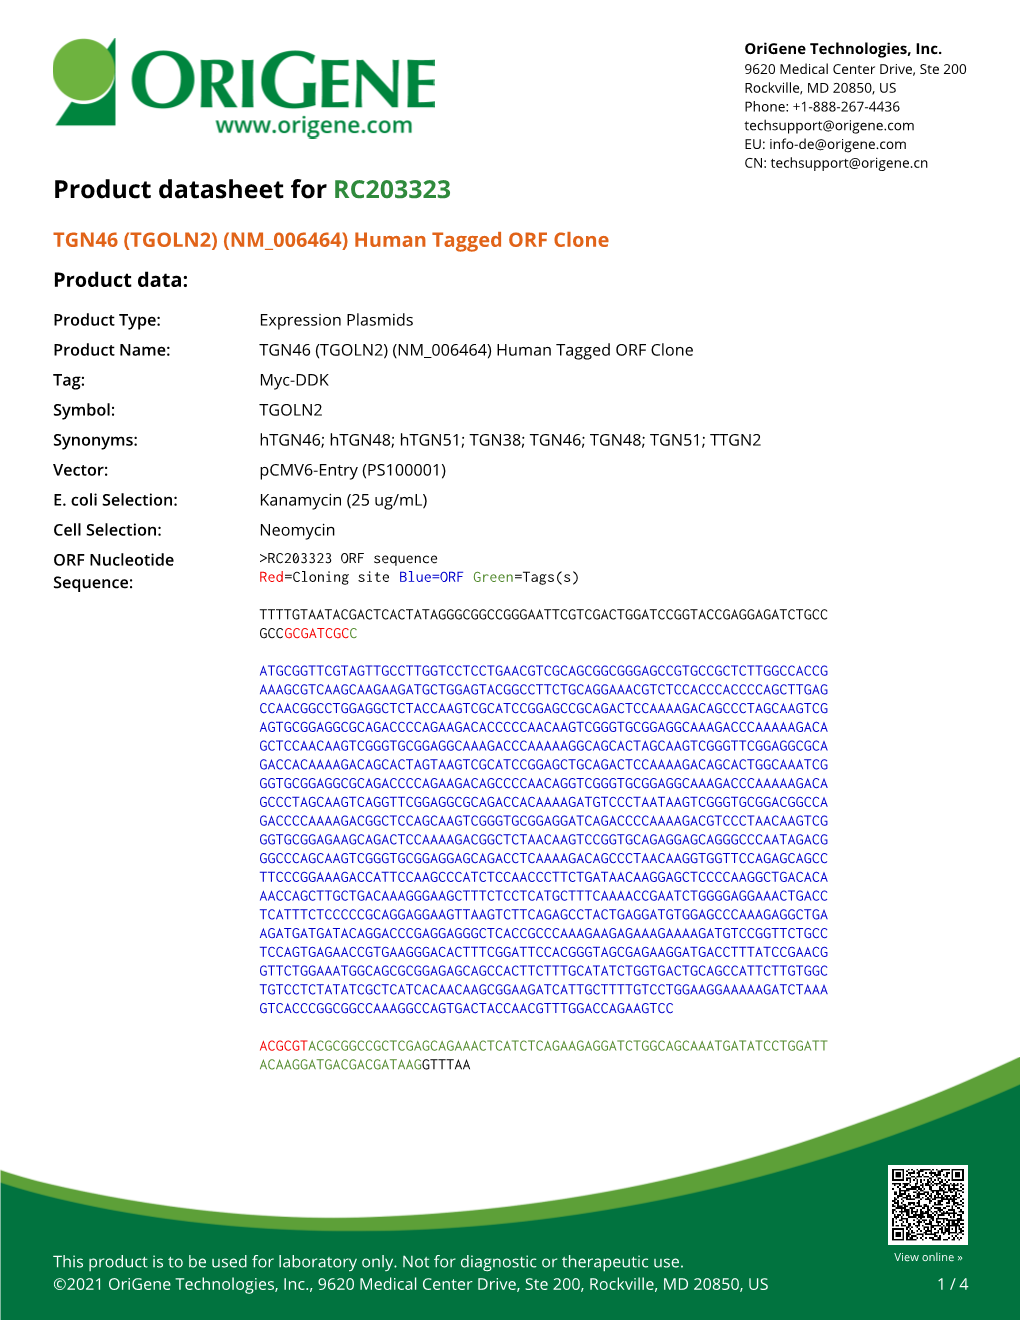 TGN46 (TGOLN2) (NM 006464) Human Tagged ORF Clone Product Data